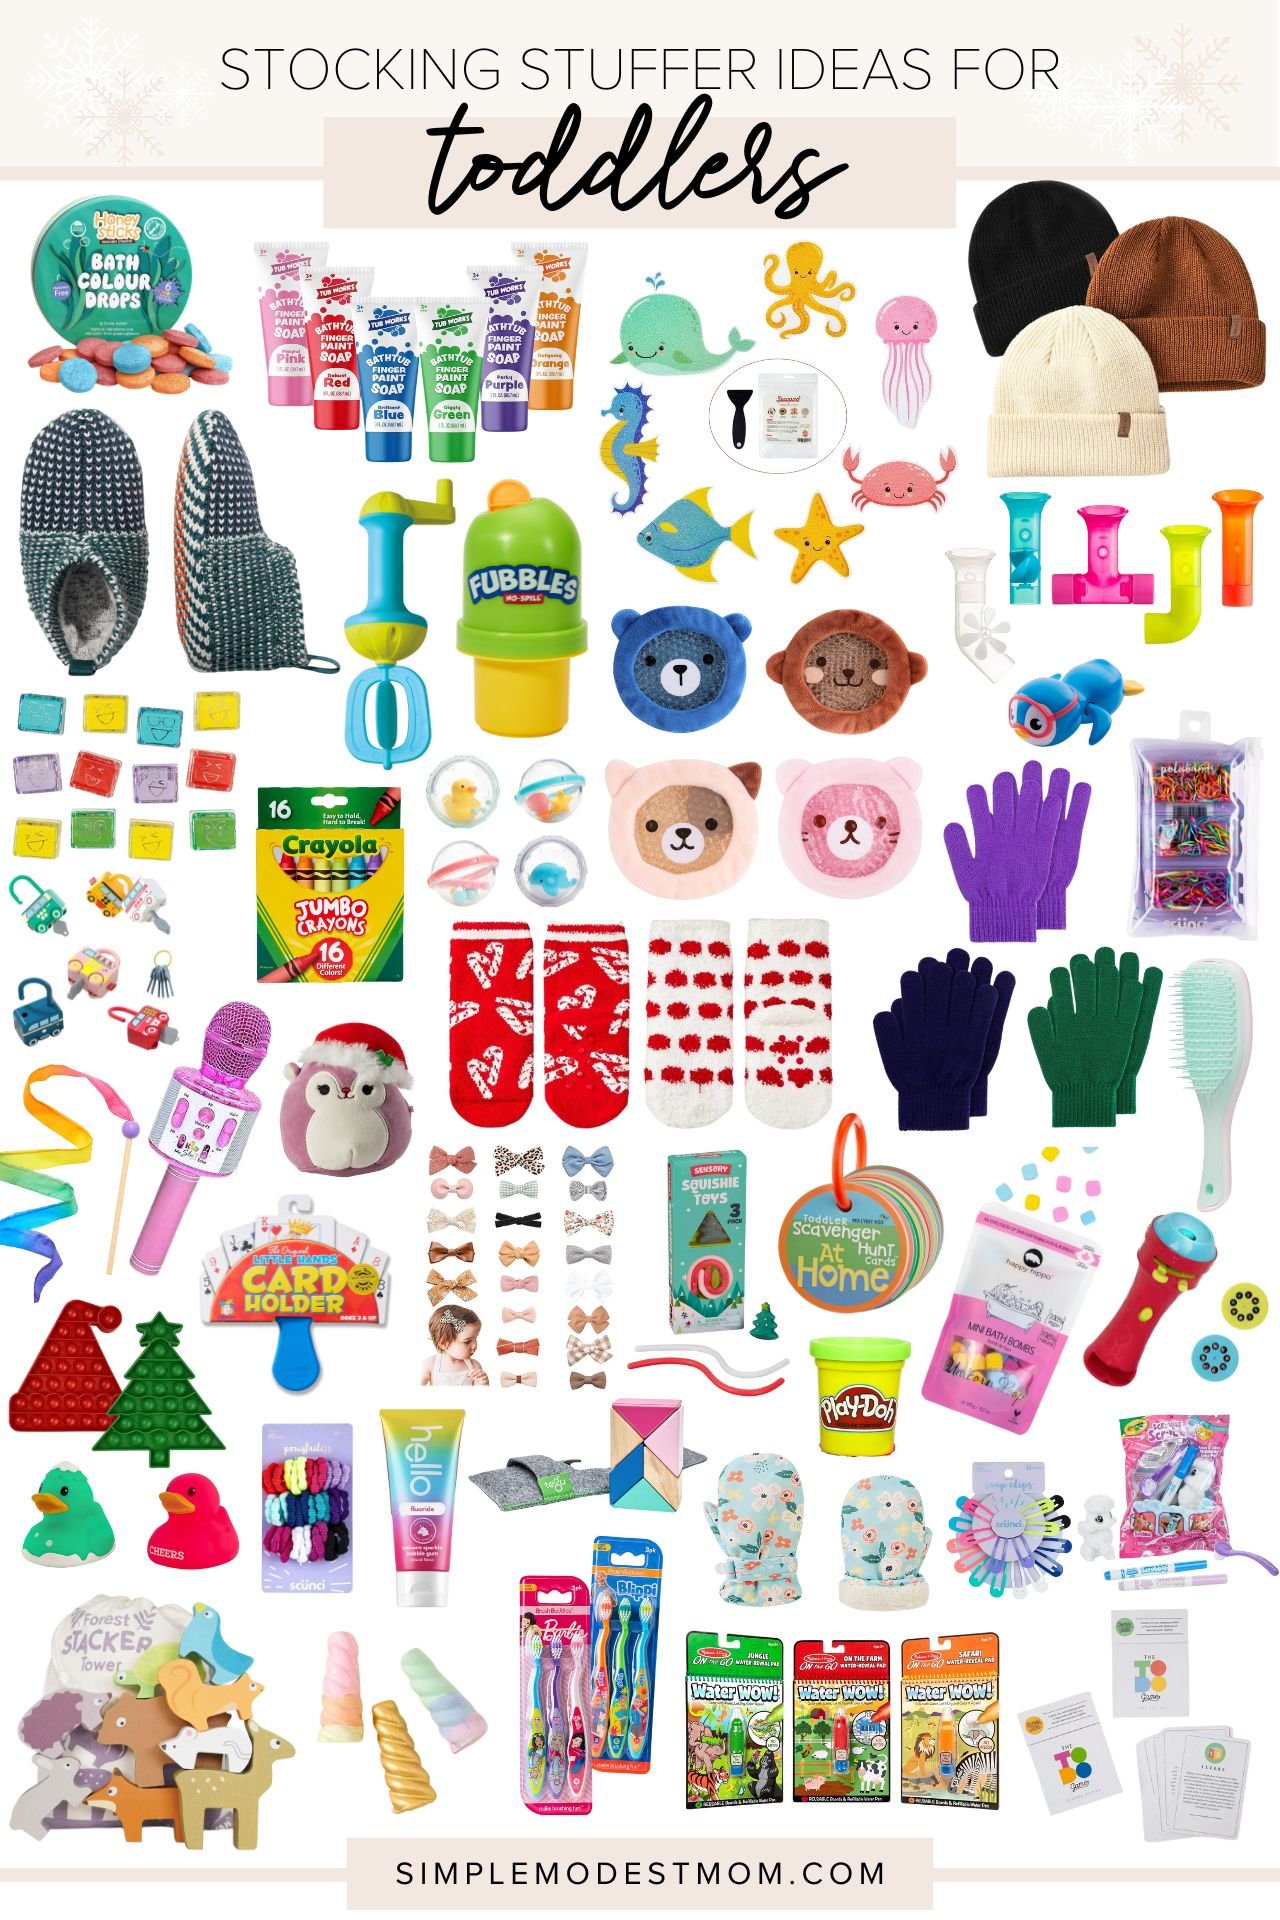 Stocking Stuffer Ideas for Toddlers for Christmas.jpg